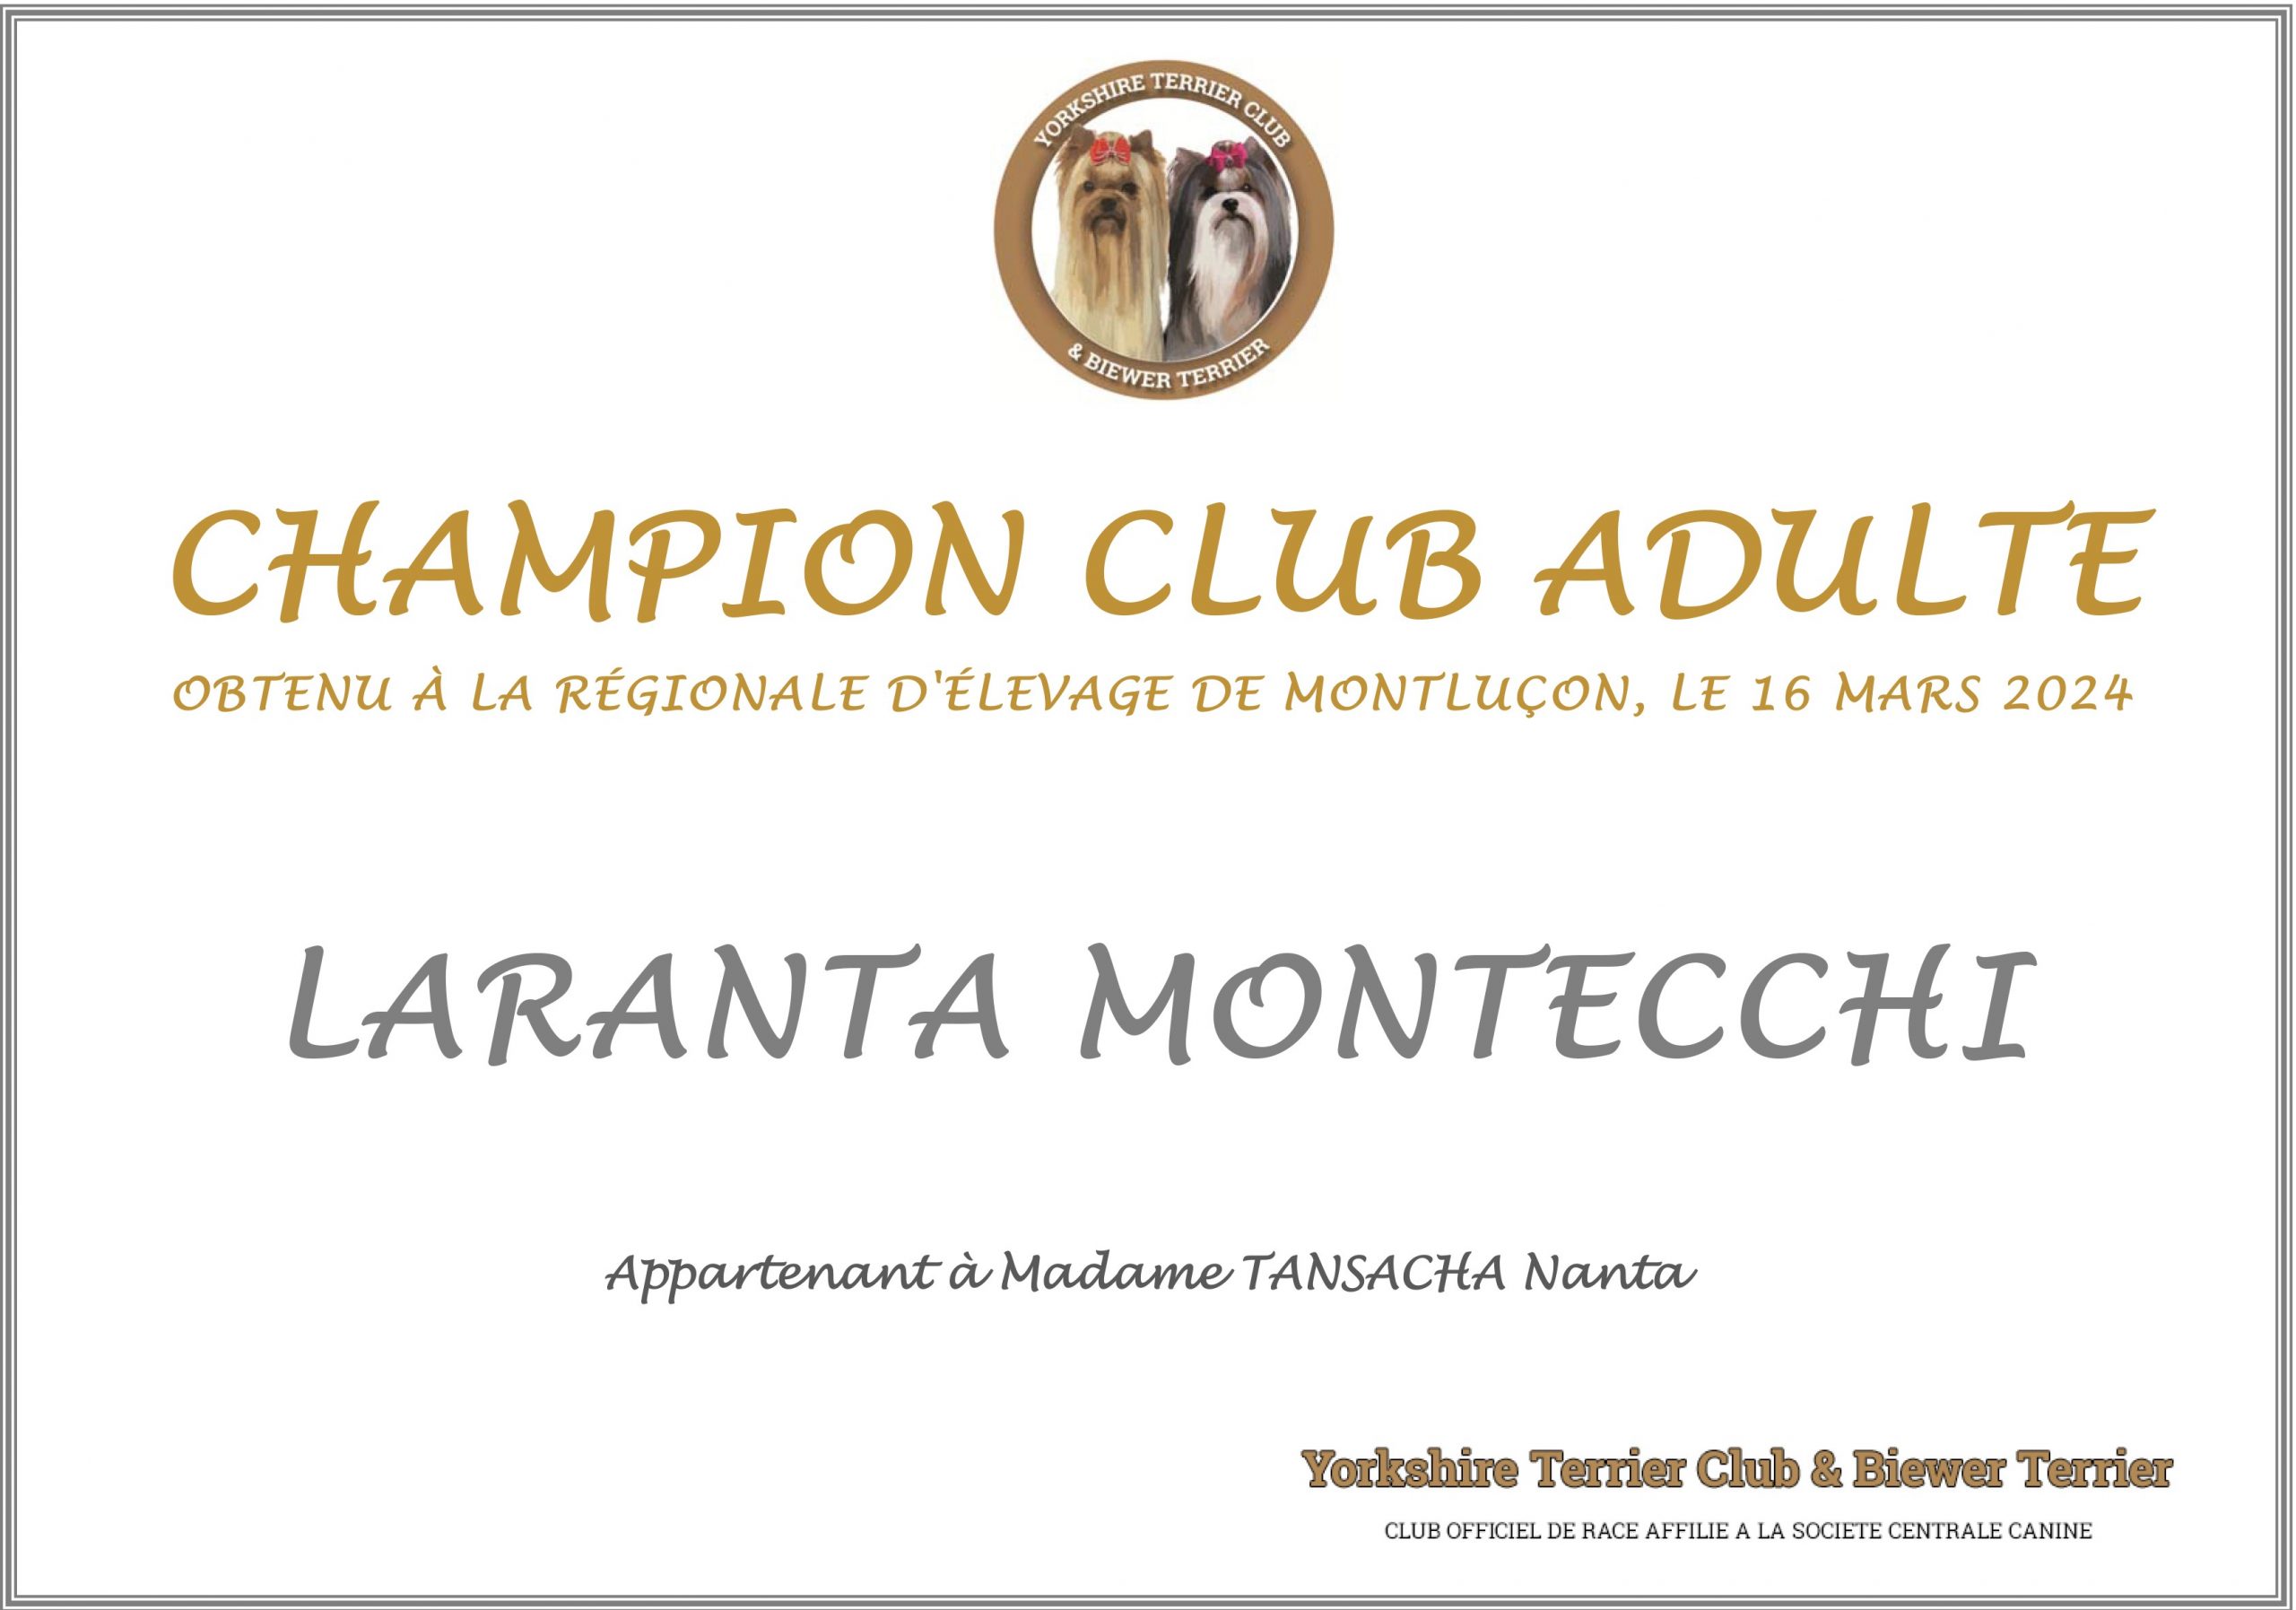 Microsoft Word - DIPLOME champion club adulte laranta montecchi.